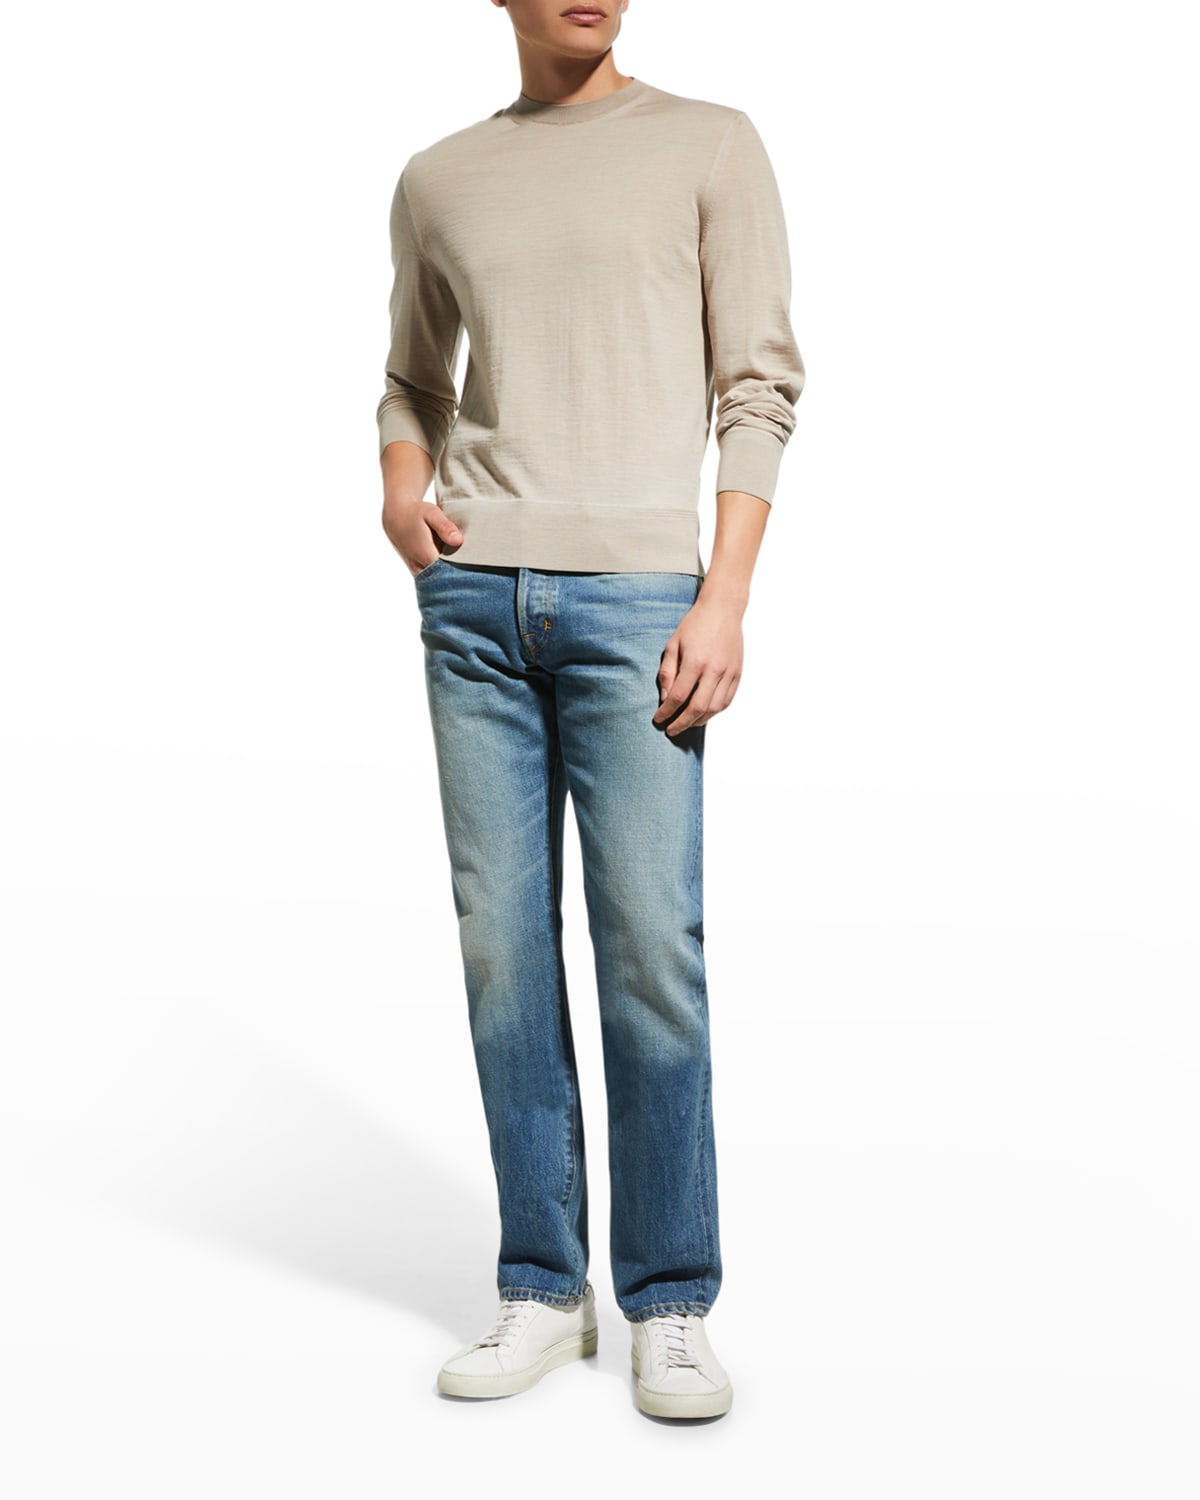 TOM FORD Men's Wool-Silk Knit Crewneck Sweater | Neiman Marcus